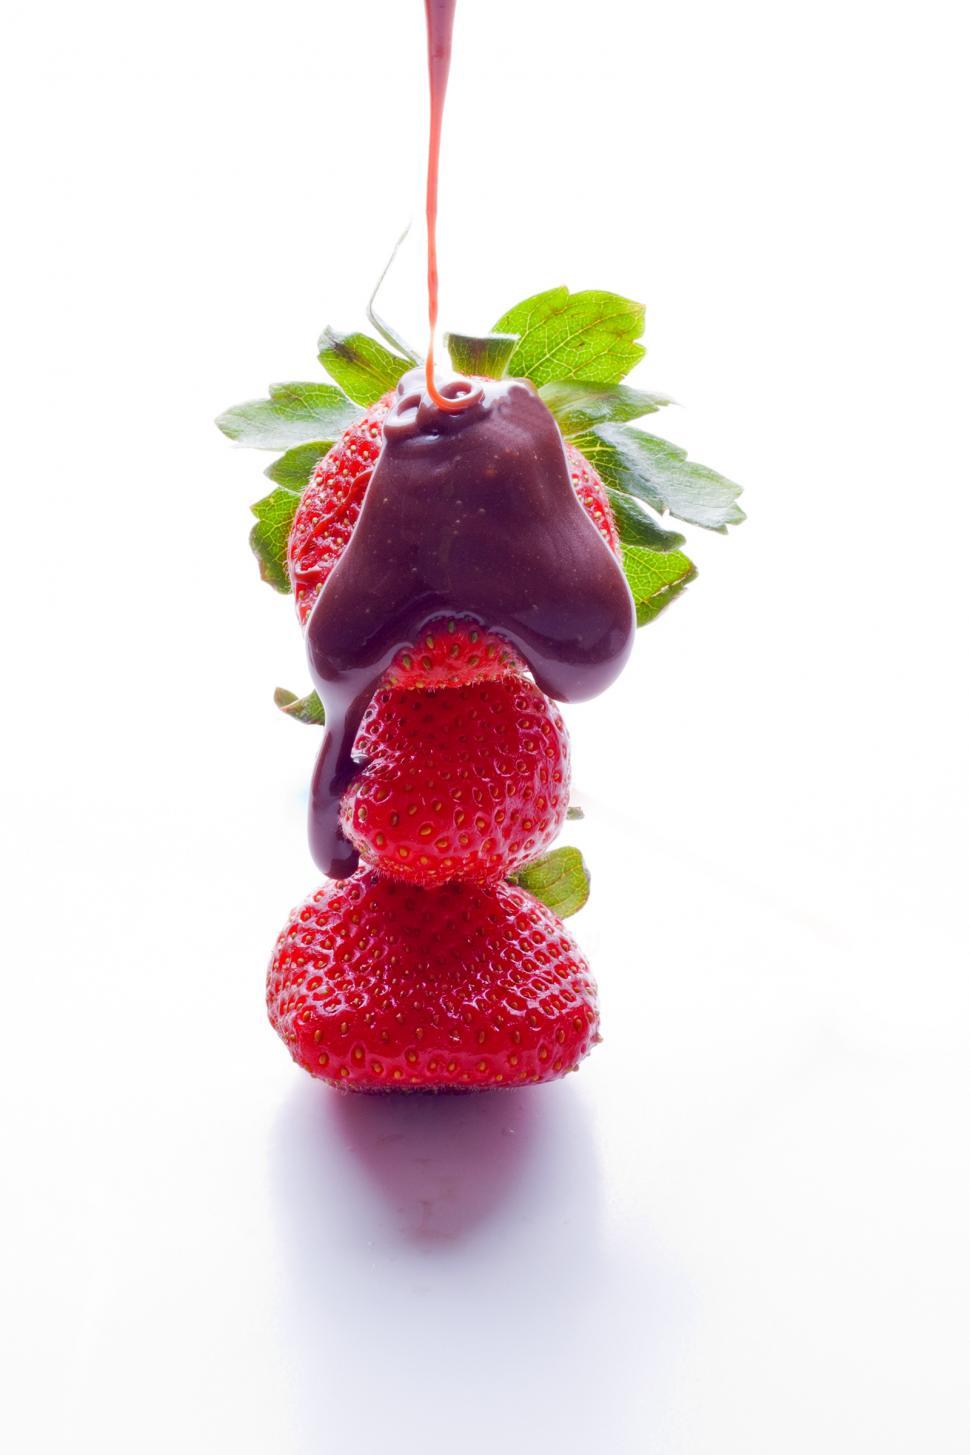 Free Image of Strawberries 